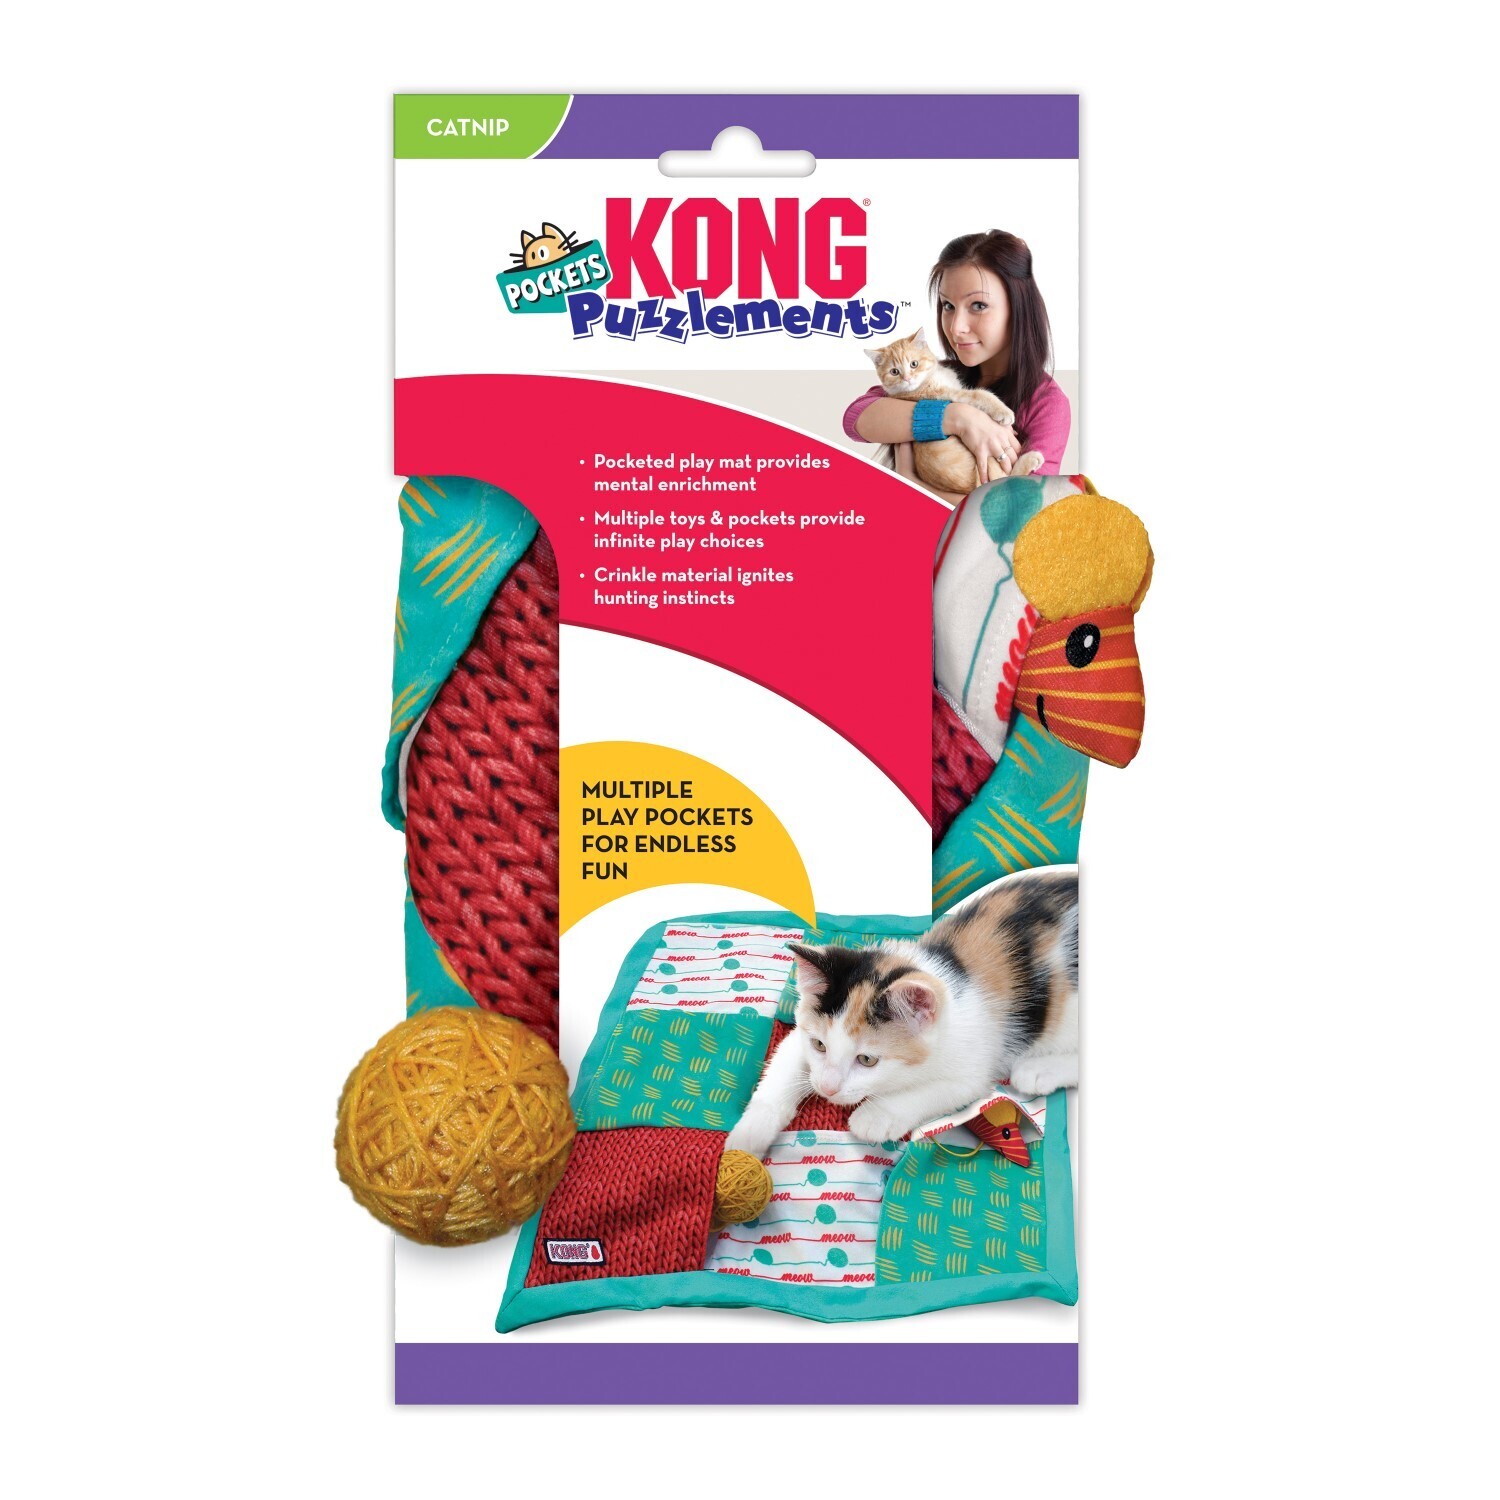 KONG Puzzlements Pockets Interactive Treat Hiding Cat Play Mat x 2 Unit/s image 1